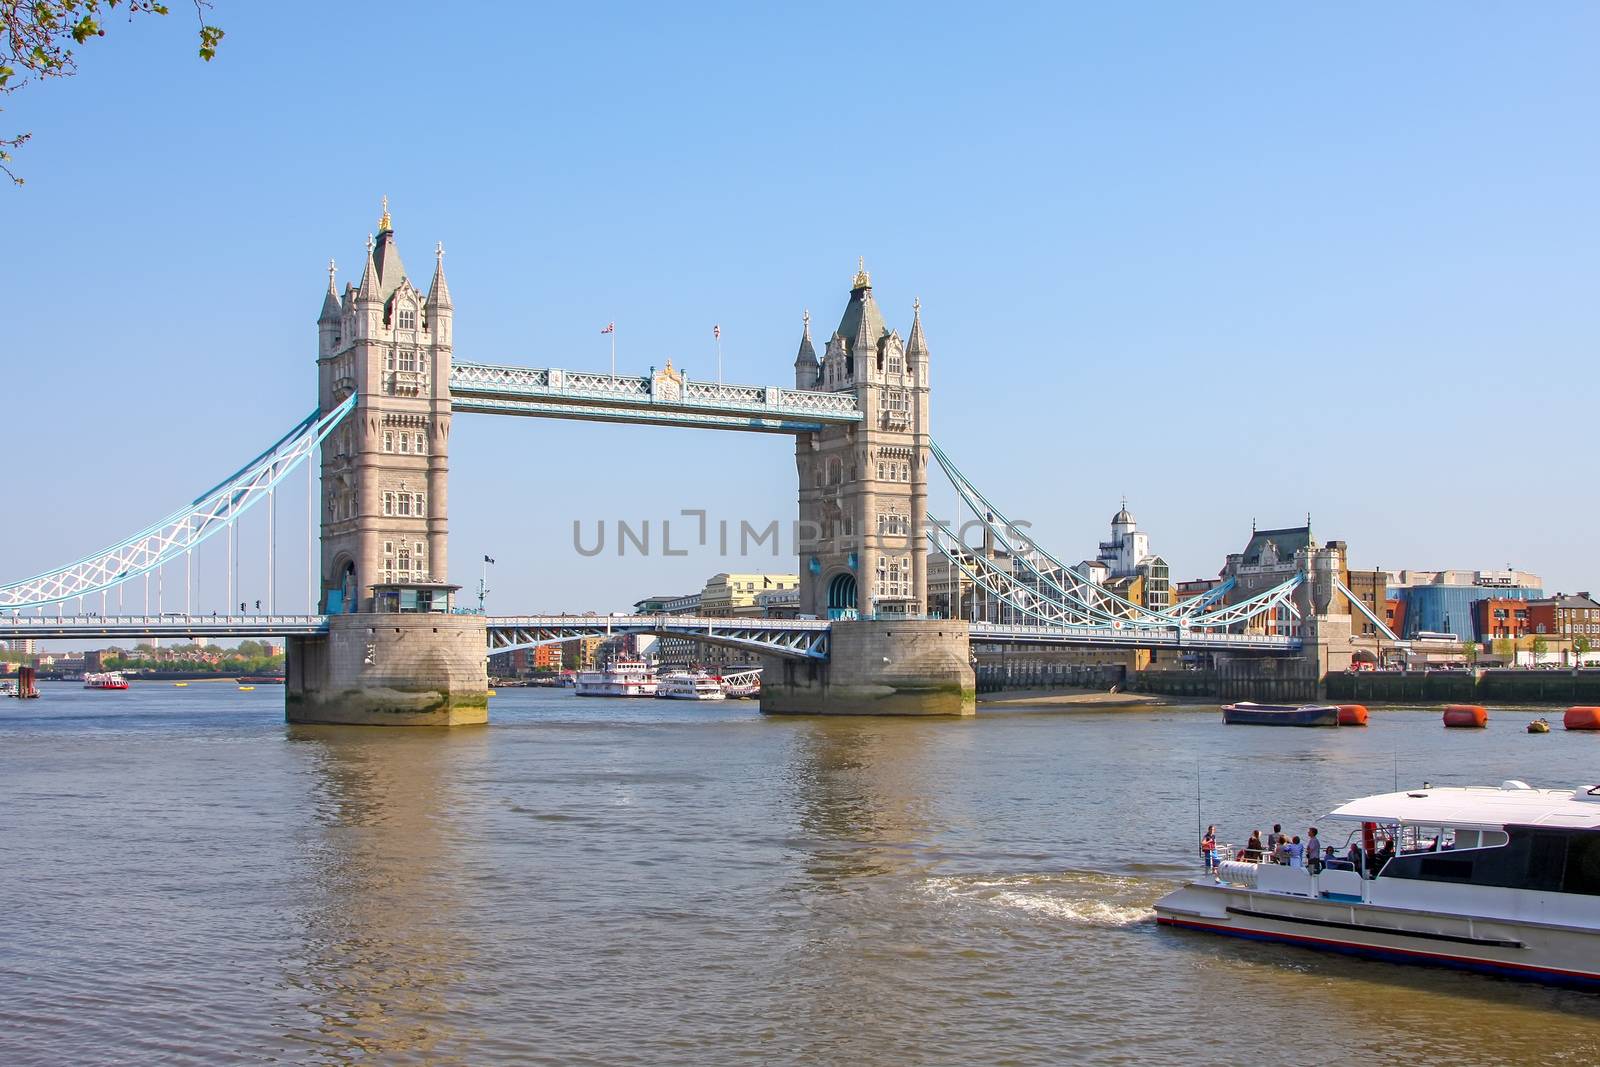 Tower bridge in London by magann